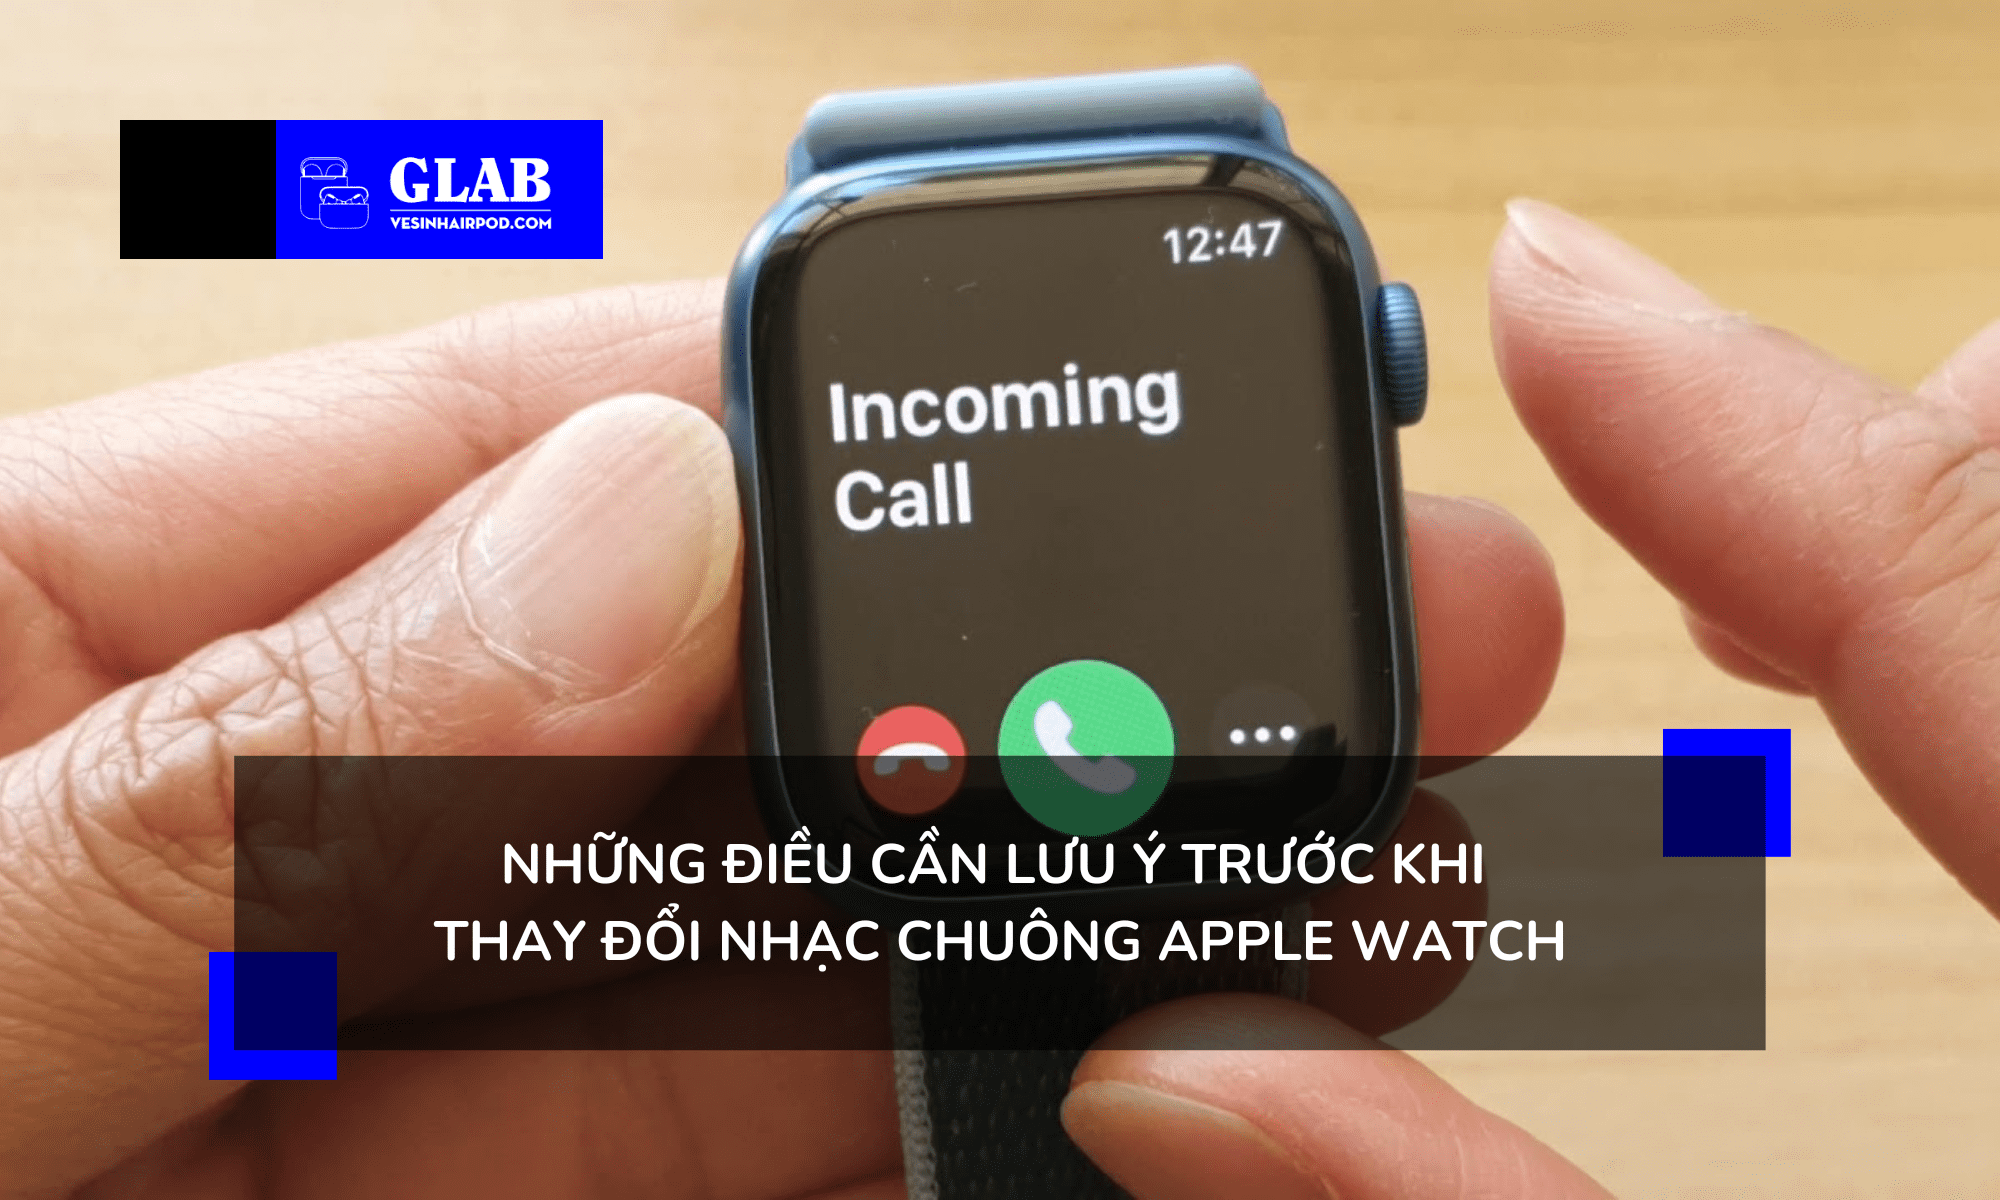 cach-thay-doi-nhac-chuong-apple-watch 